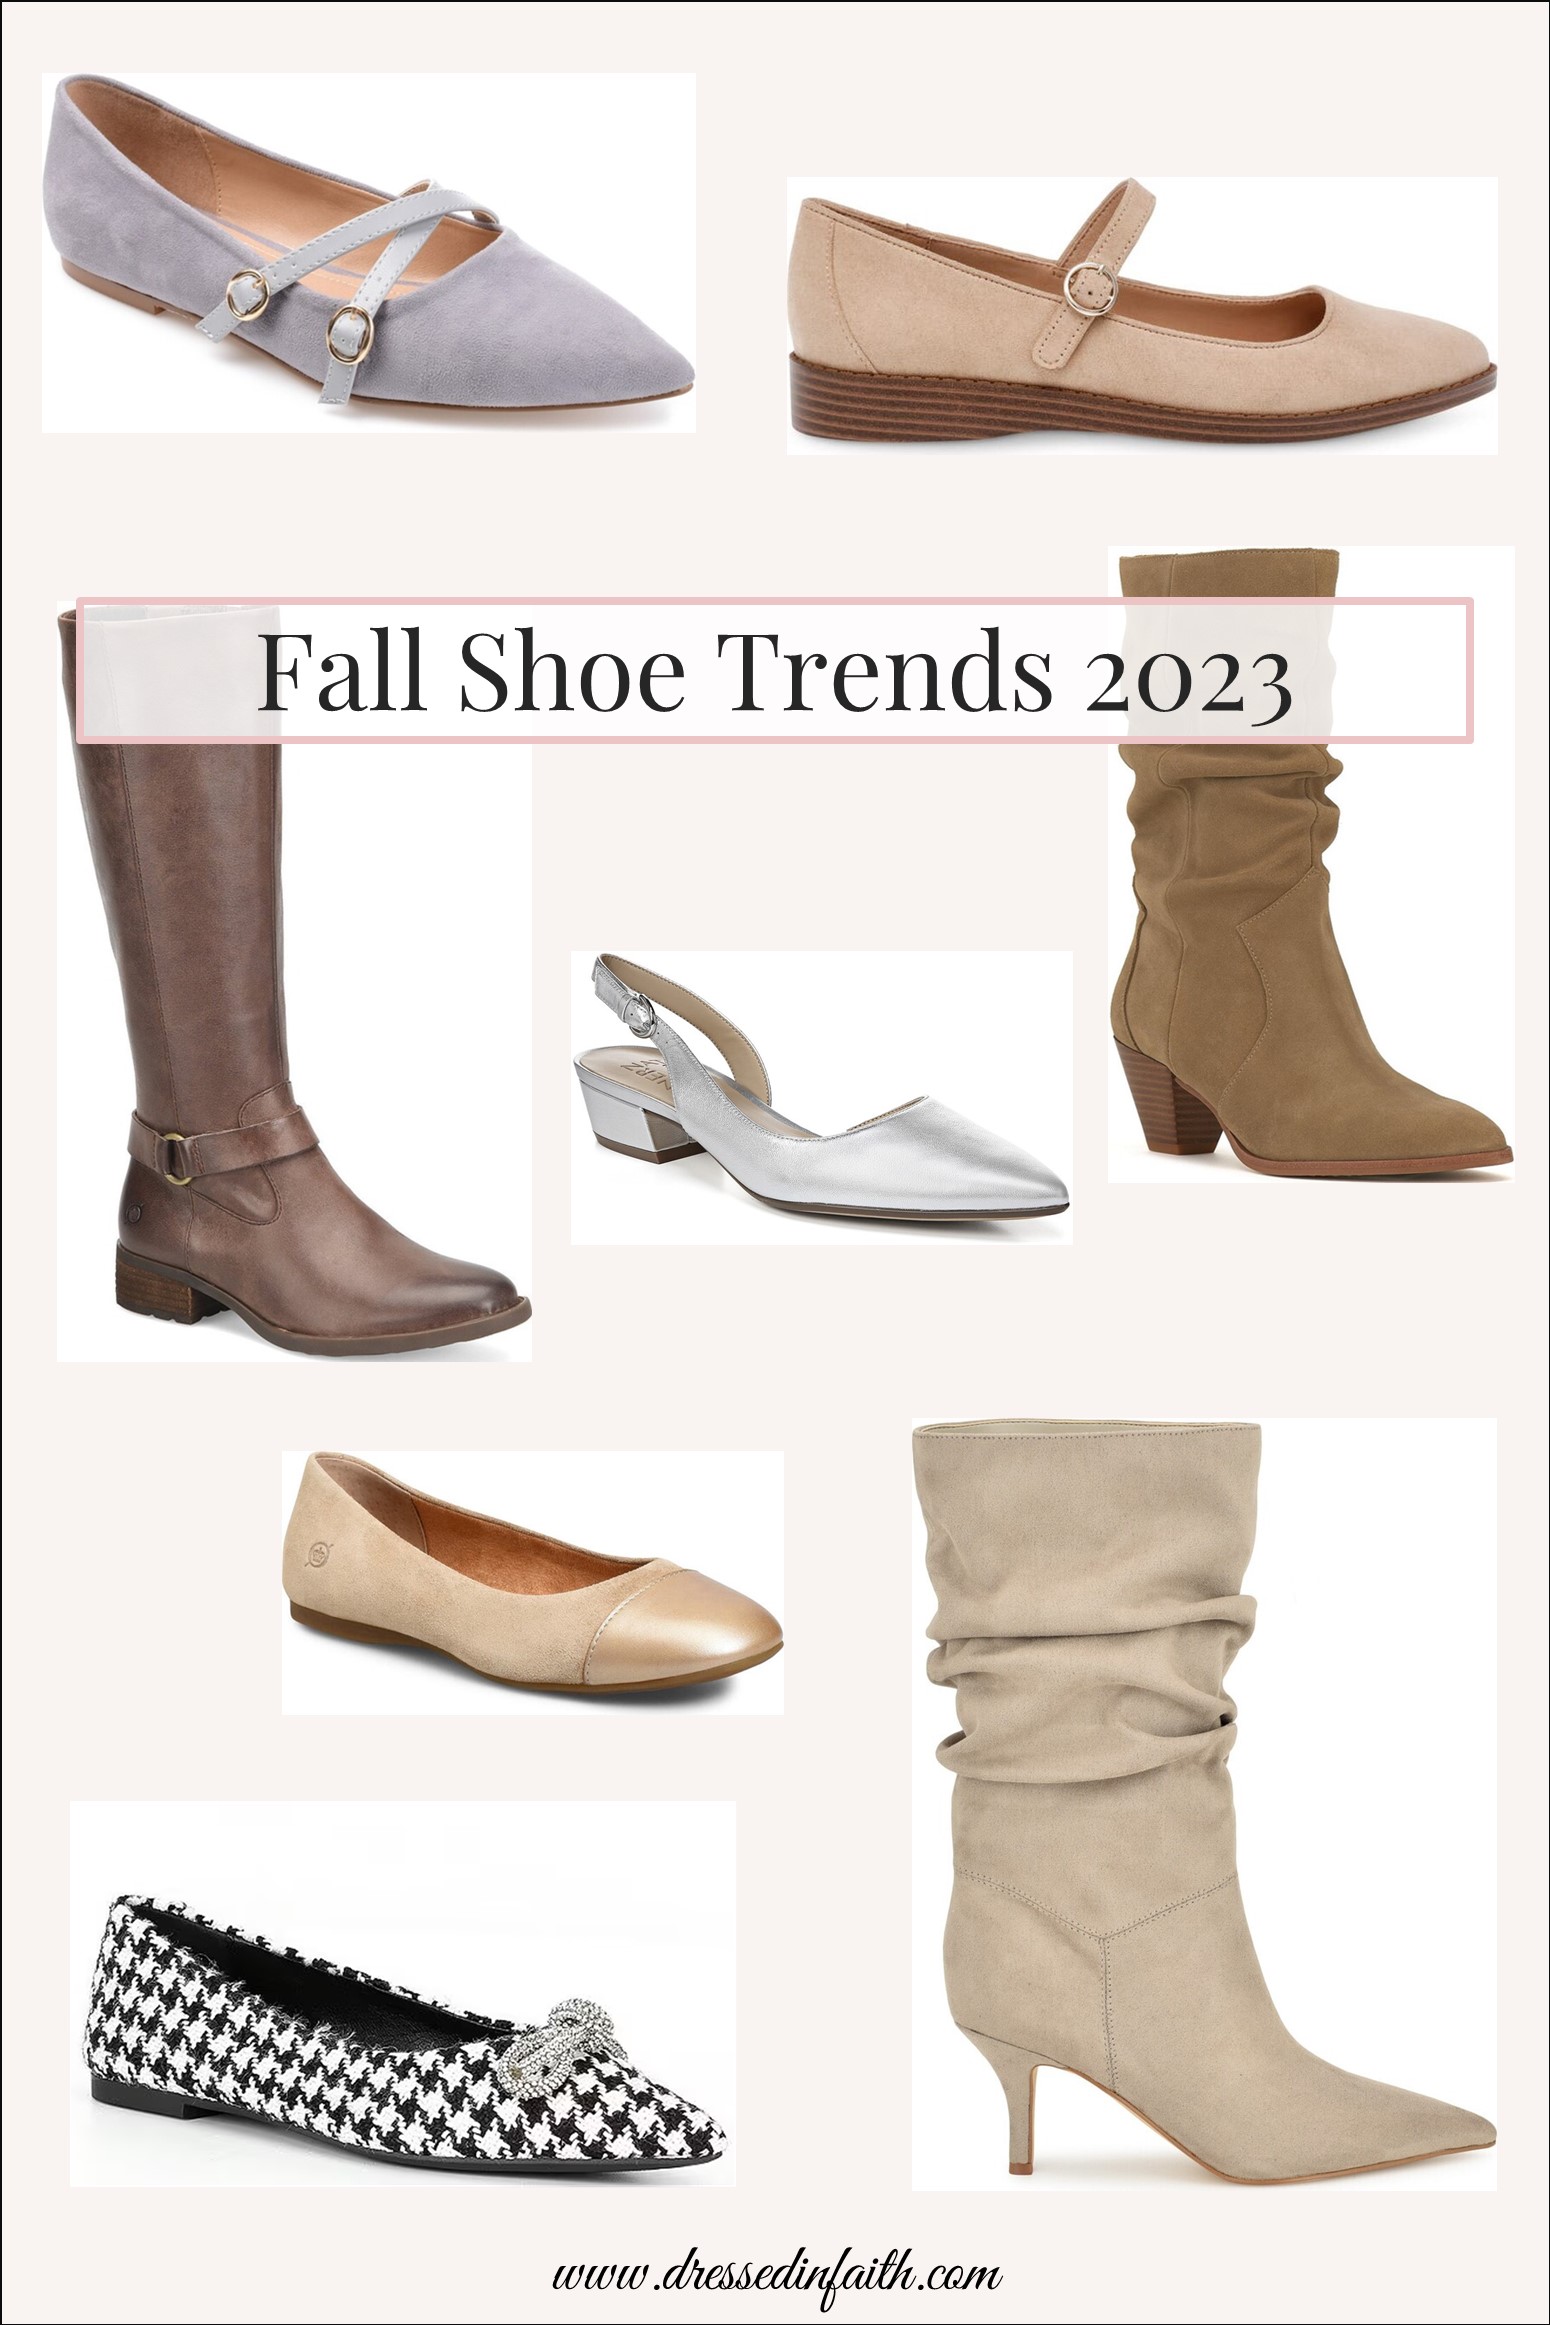 https://www.dressedinfaith.com/wp-content/uploads/2023/08/Fall-Shoe-Trends-2023.jpg